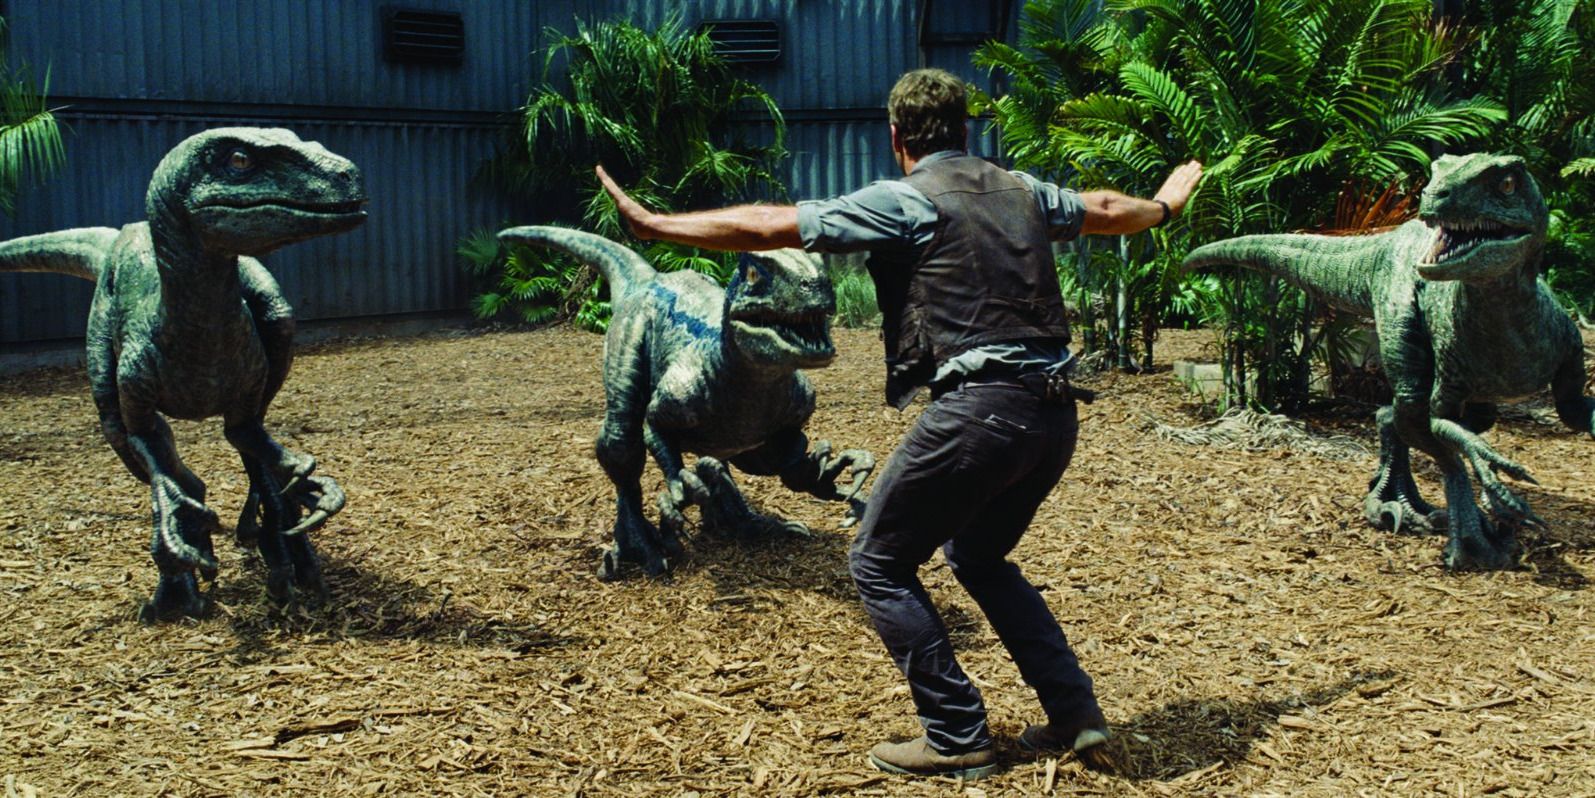 Owen trains the raptors in Jurassic World